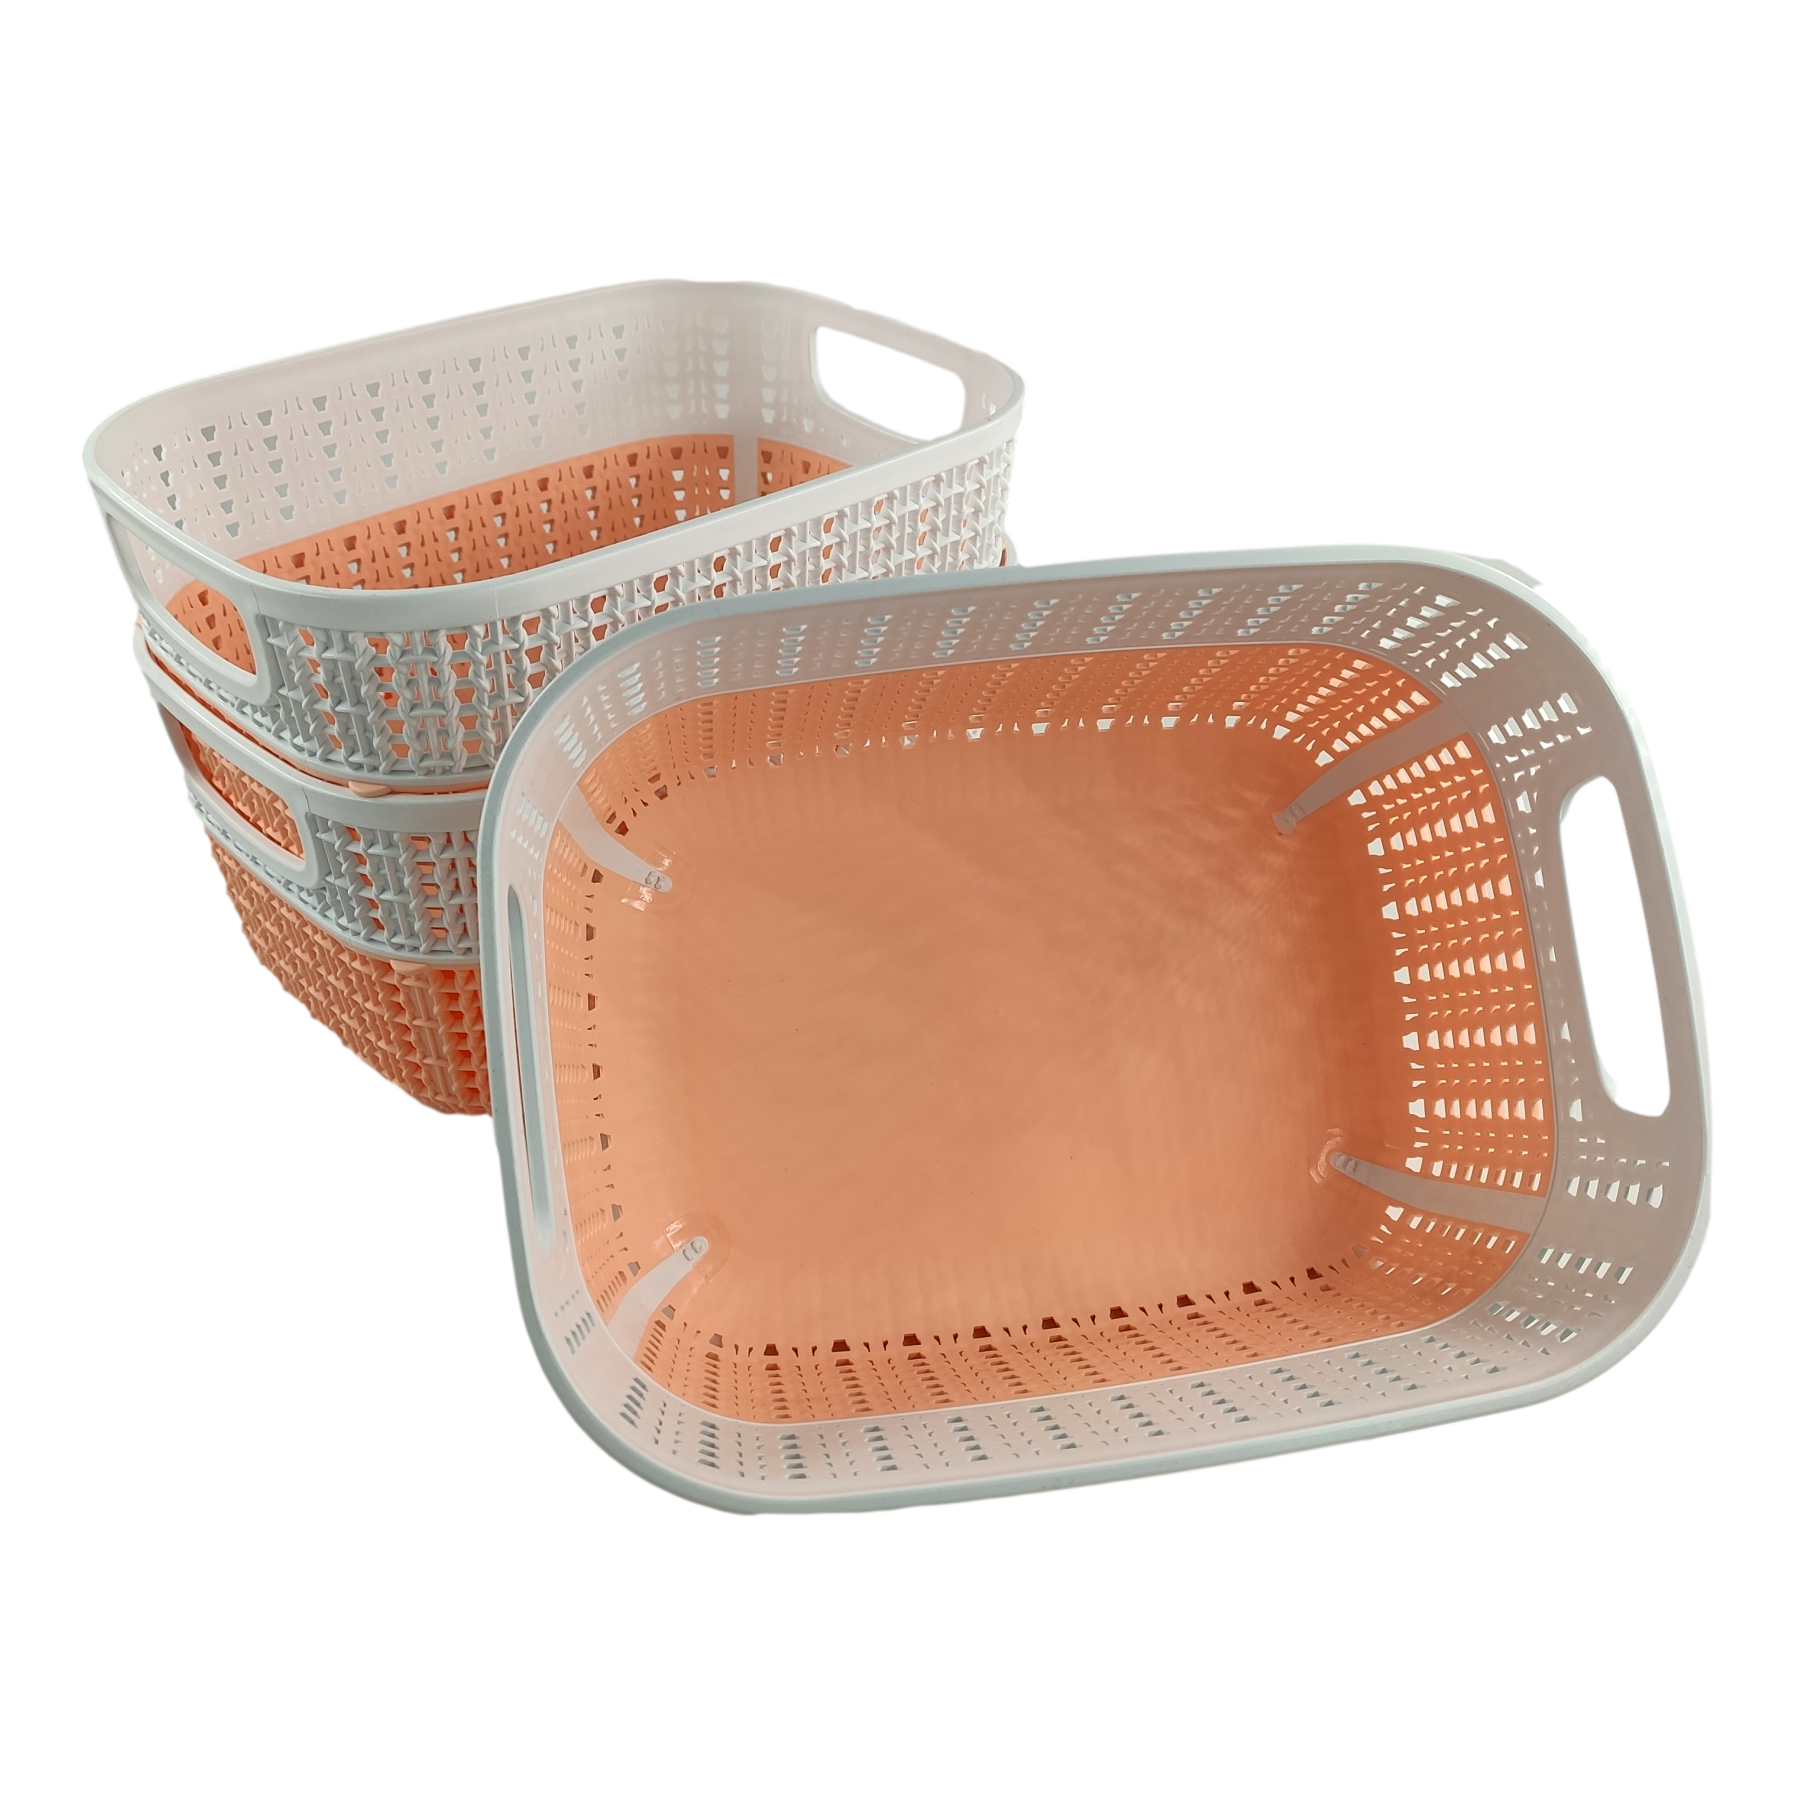 Round Washable Plastic Basket – Orange - For Small Hands